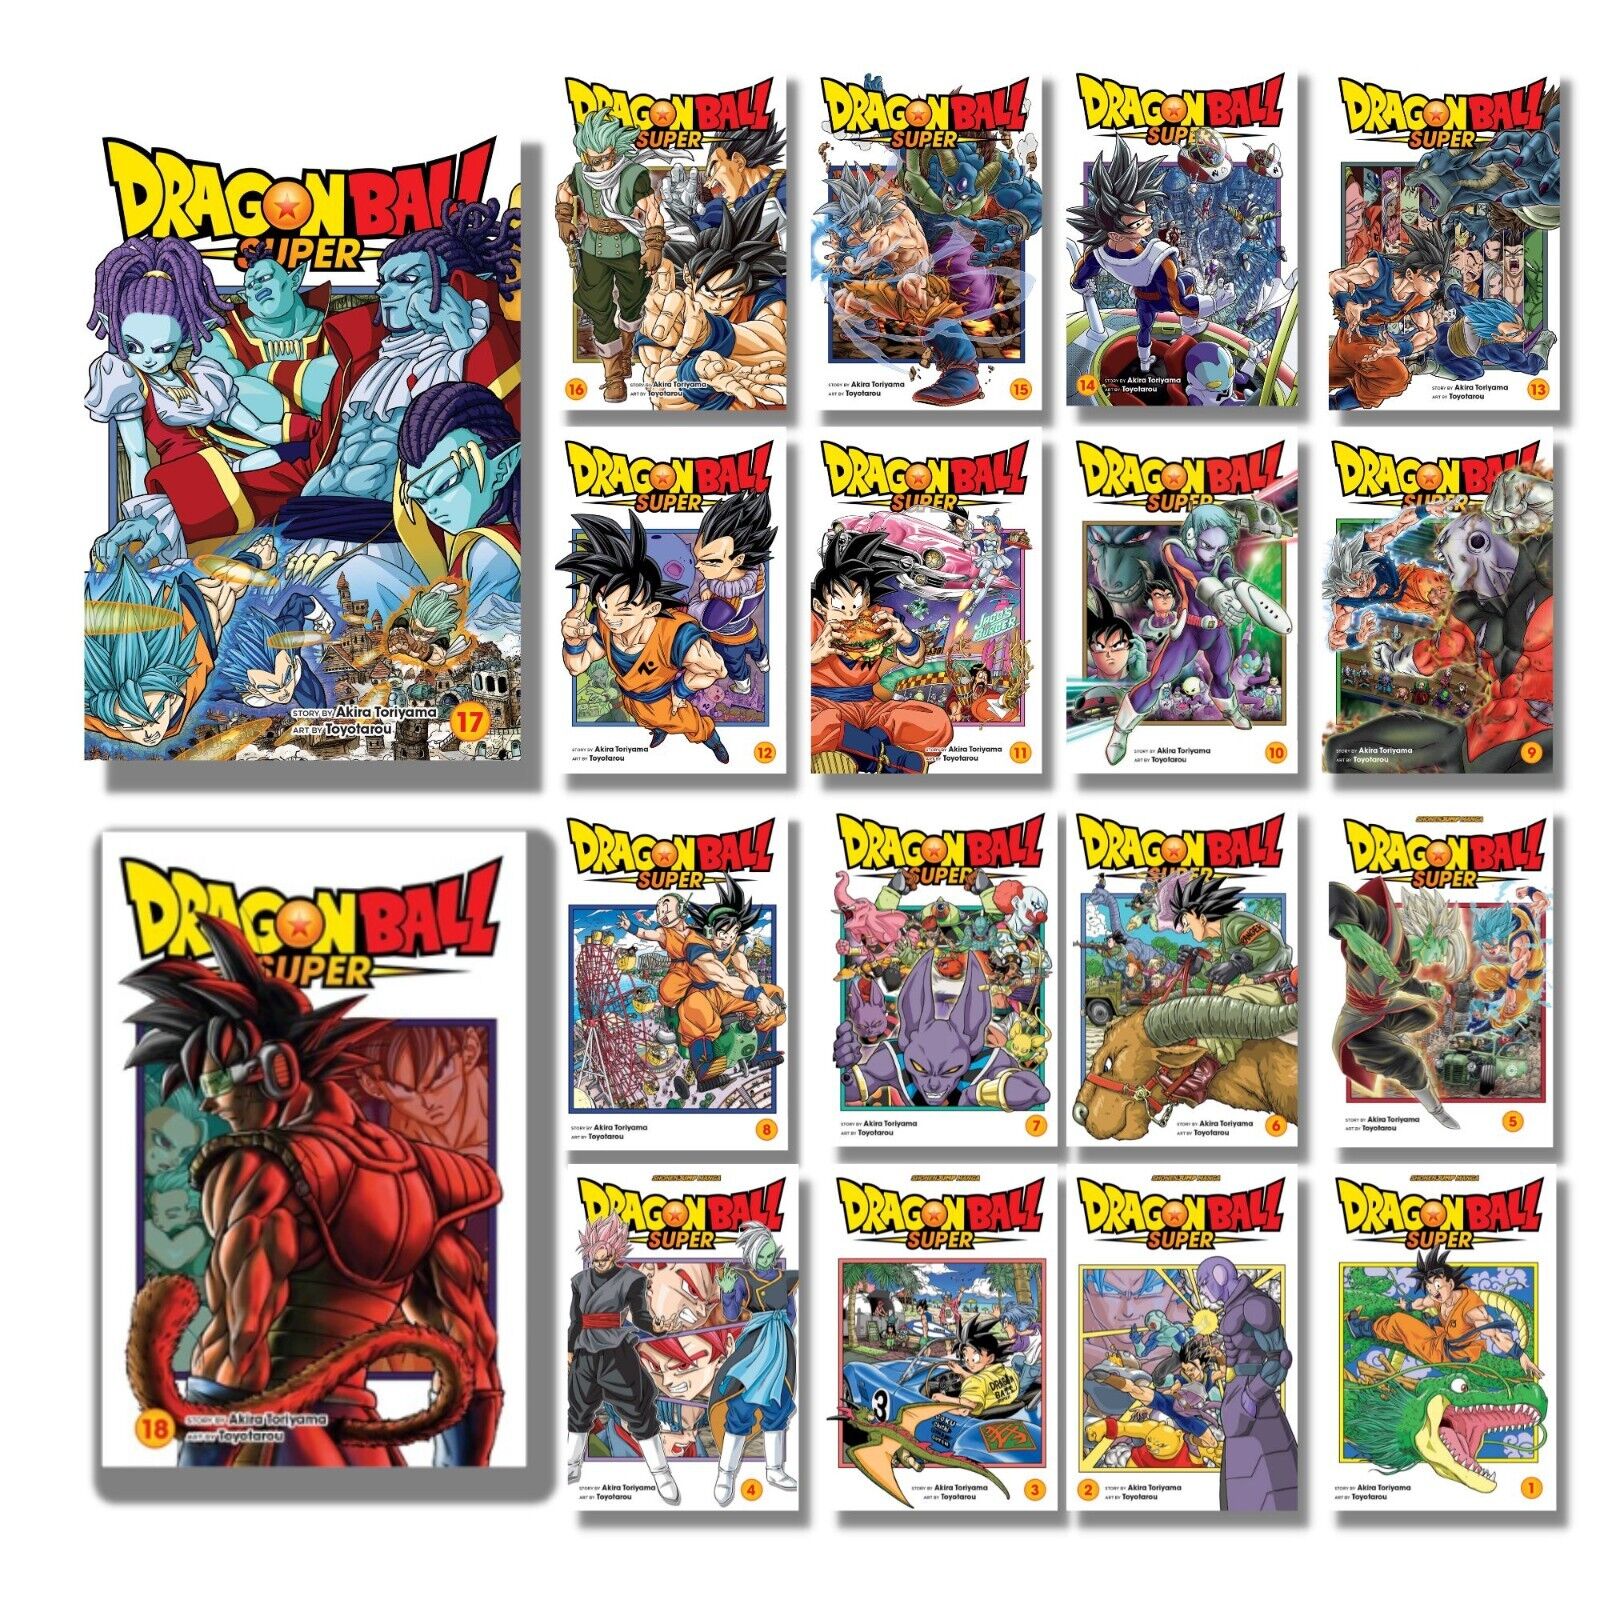 Dragon Ball Super Vol. 1-18 Set English Manga - With Action Figure - Brand New